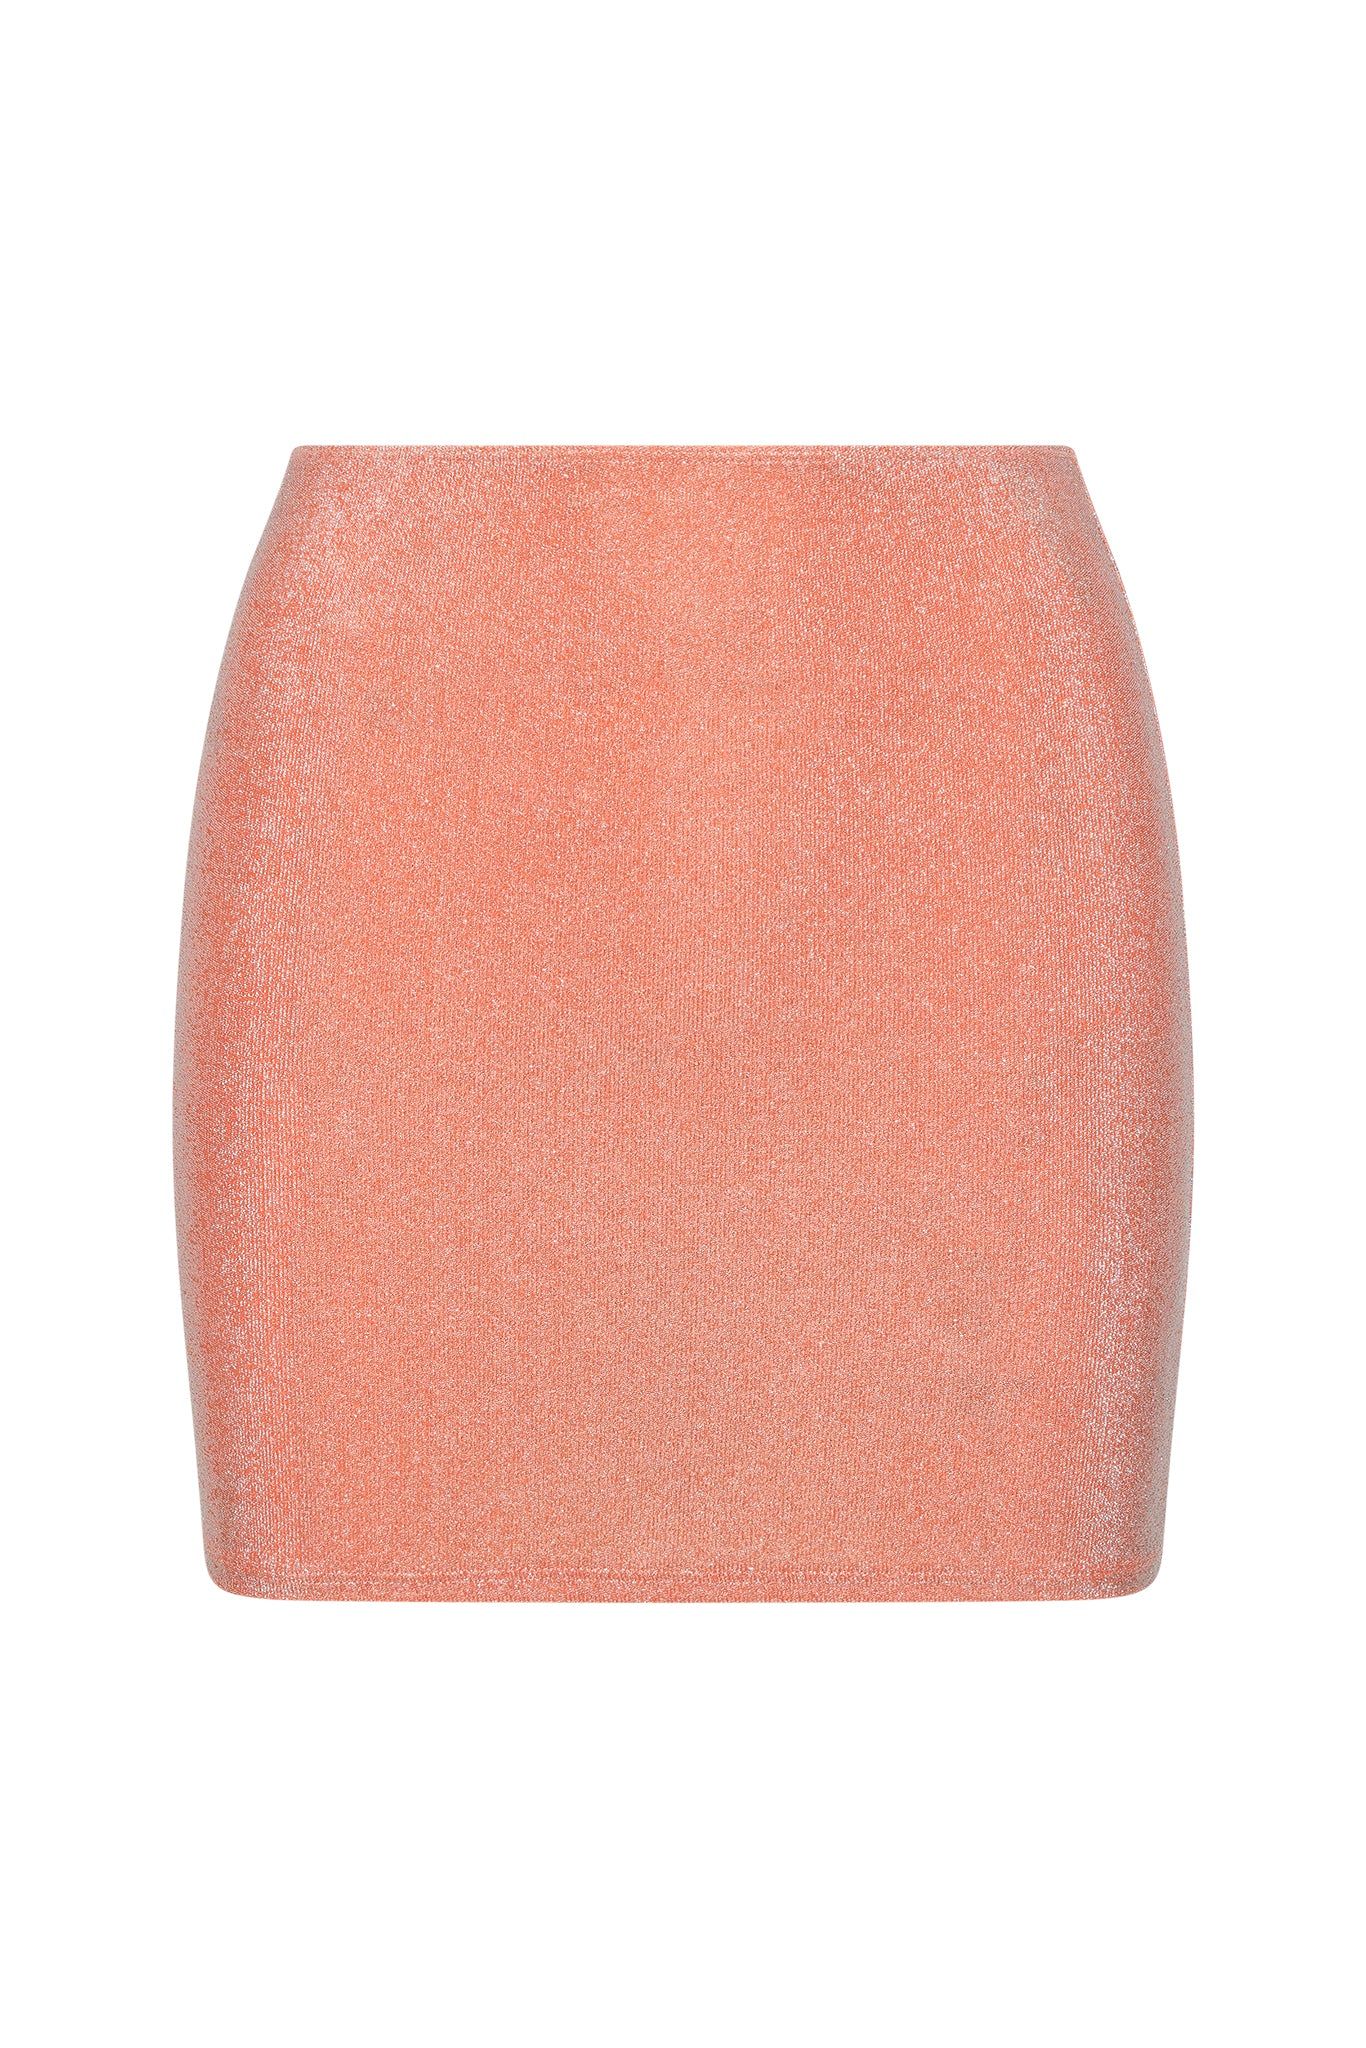 Cayman Skirt - Sun Kissed Shimmer | Monday Swimwear